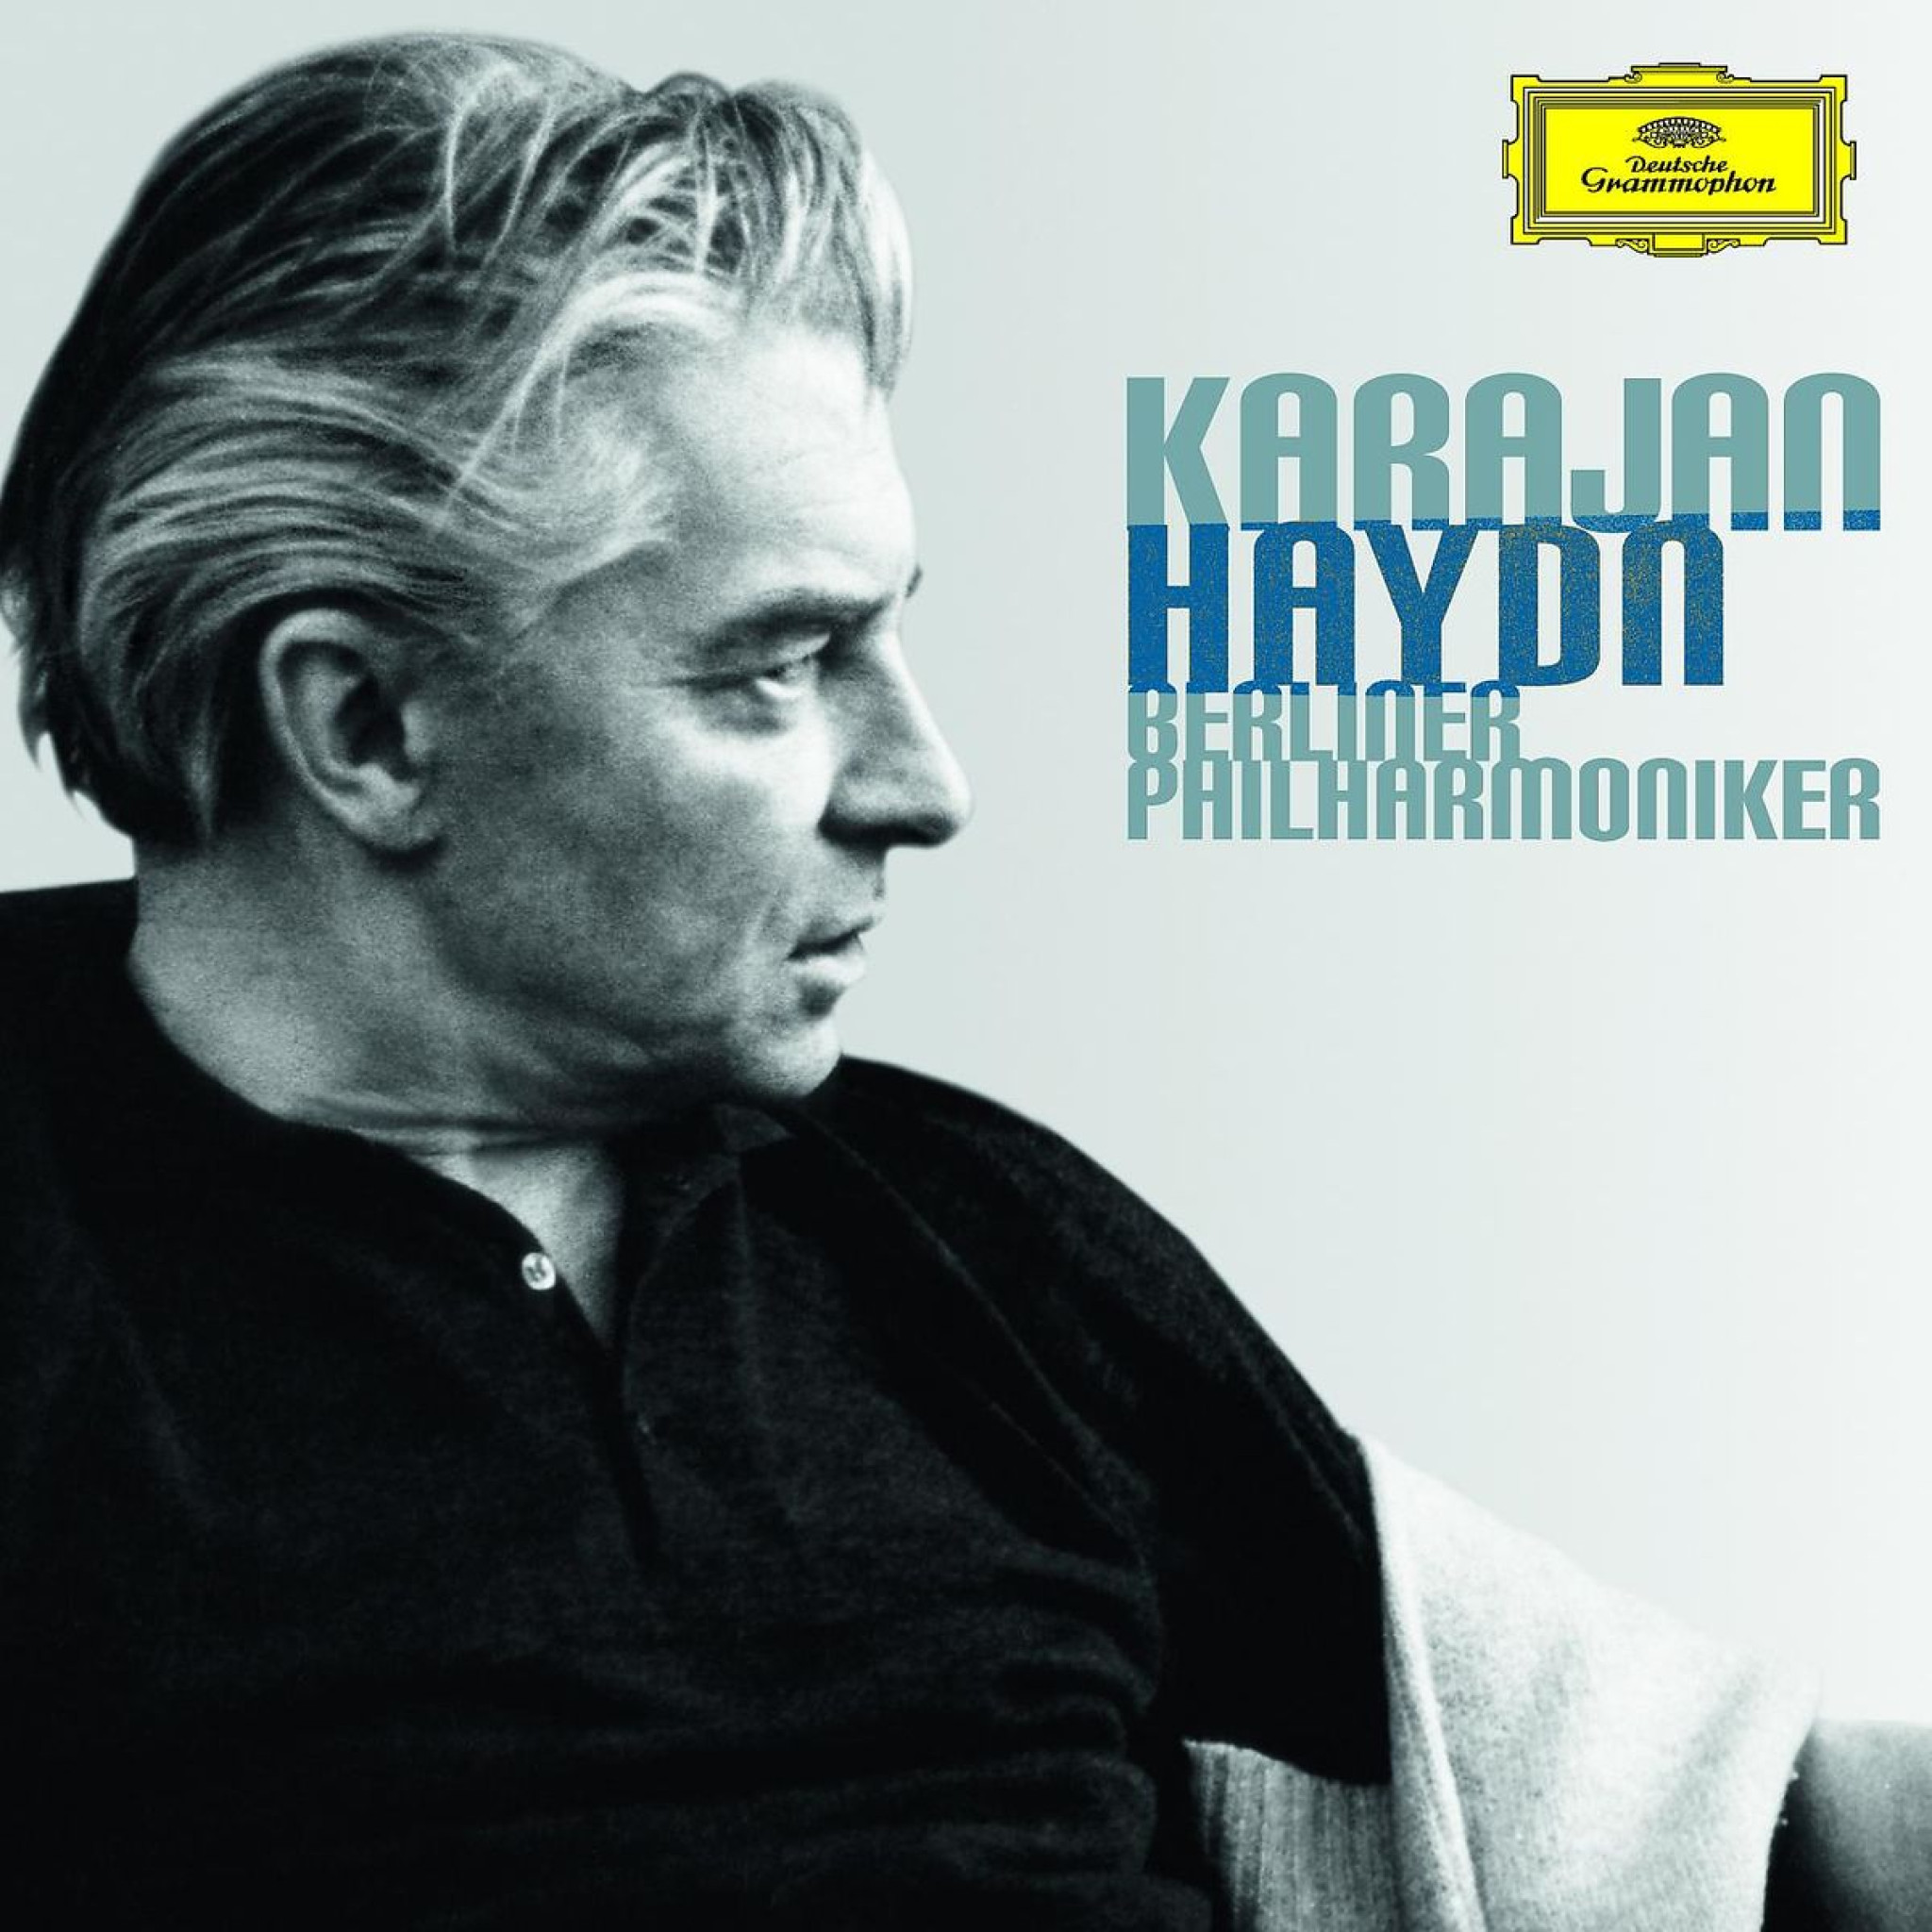 Haydn, J.: 6 "Paris" & 12 "London" Symphonies